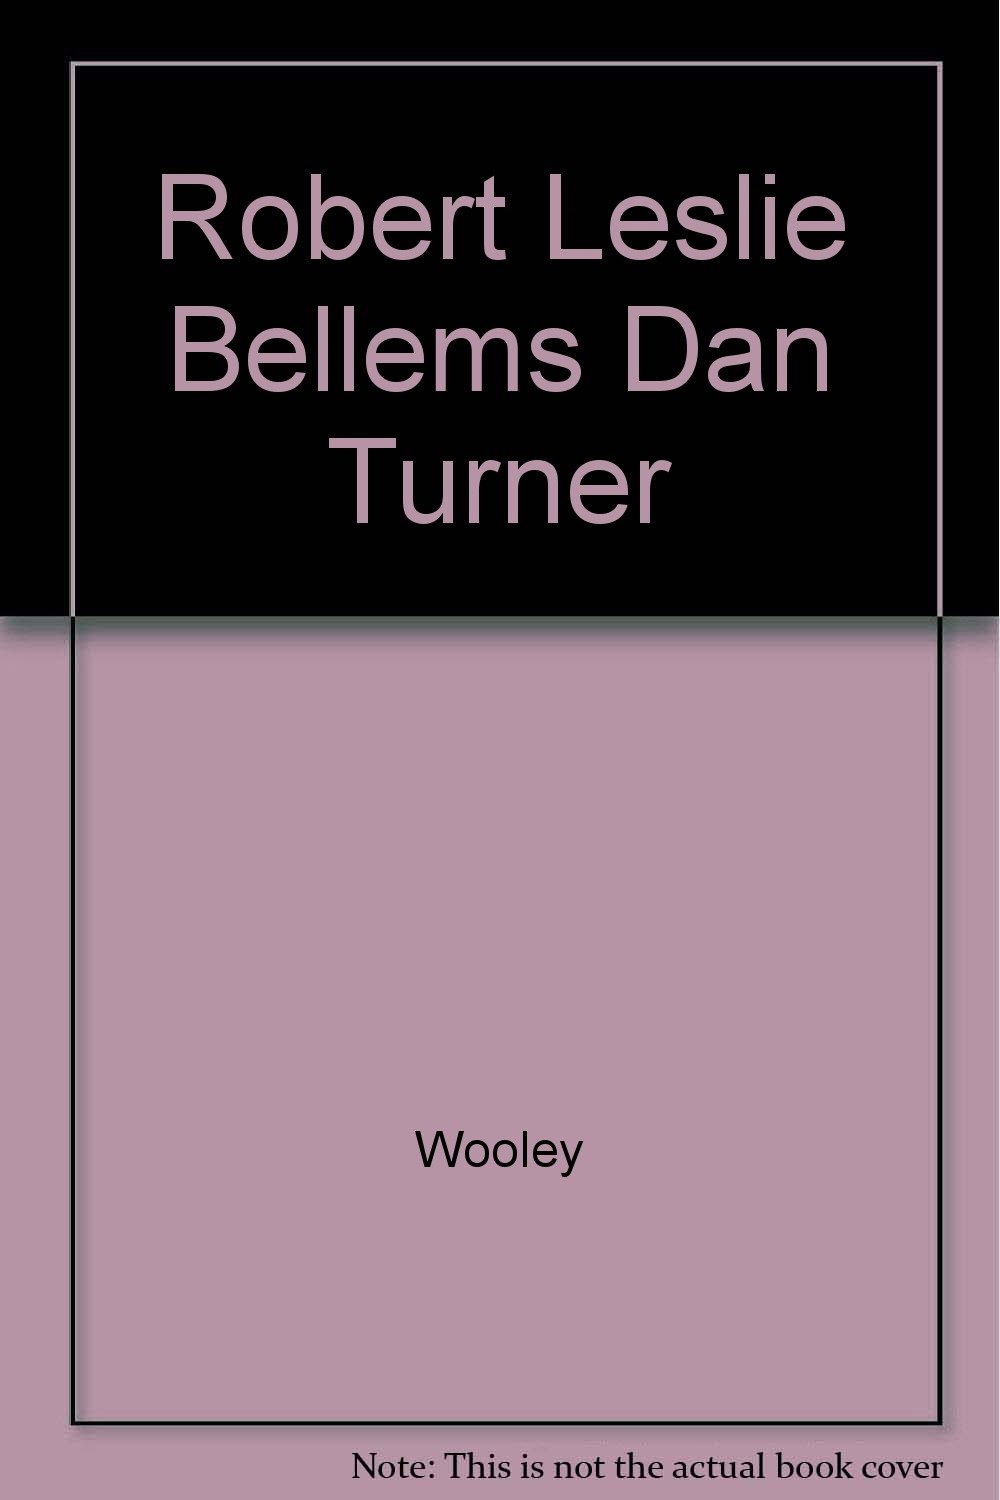 Robert Leslie Bellem's Dan Turner magazine reviews